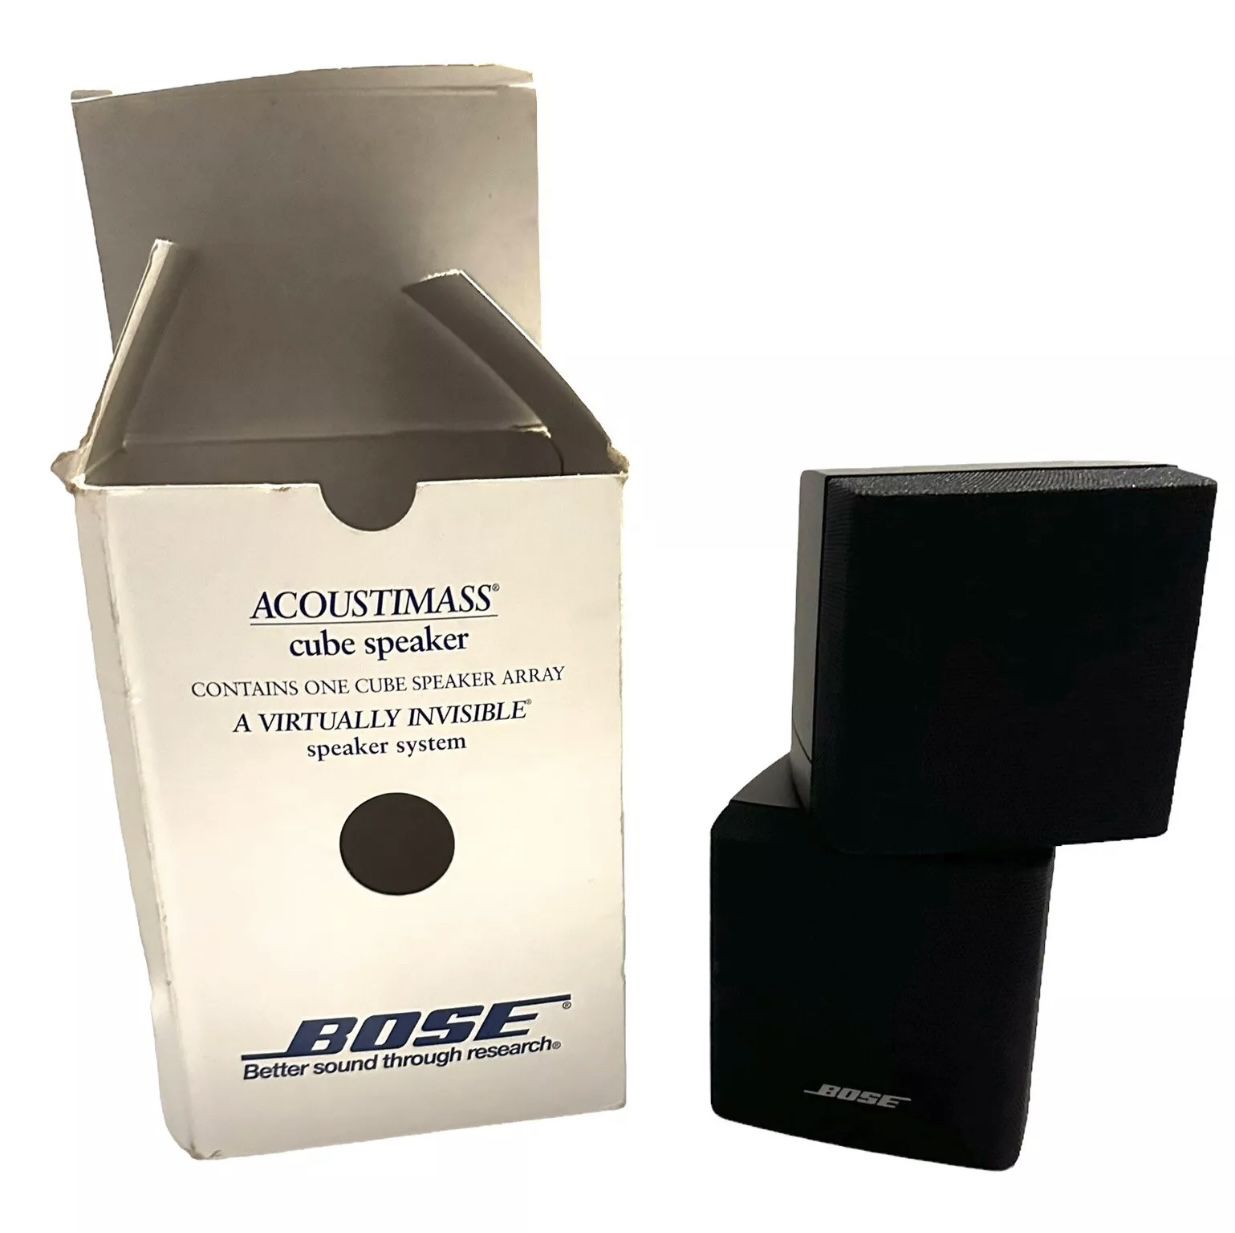 1 Bose New in Box Double Cube Speaker DoubleShot Acoustimass Lifestyle Black